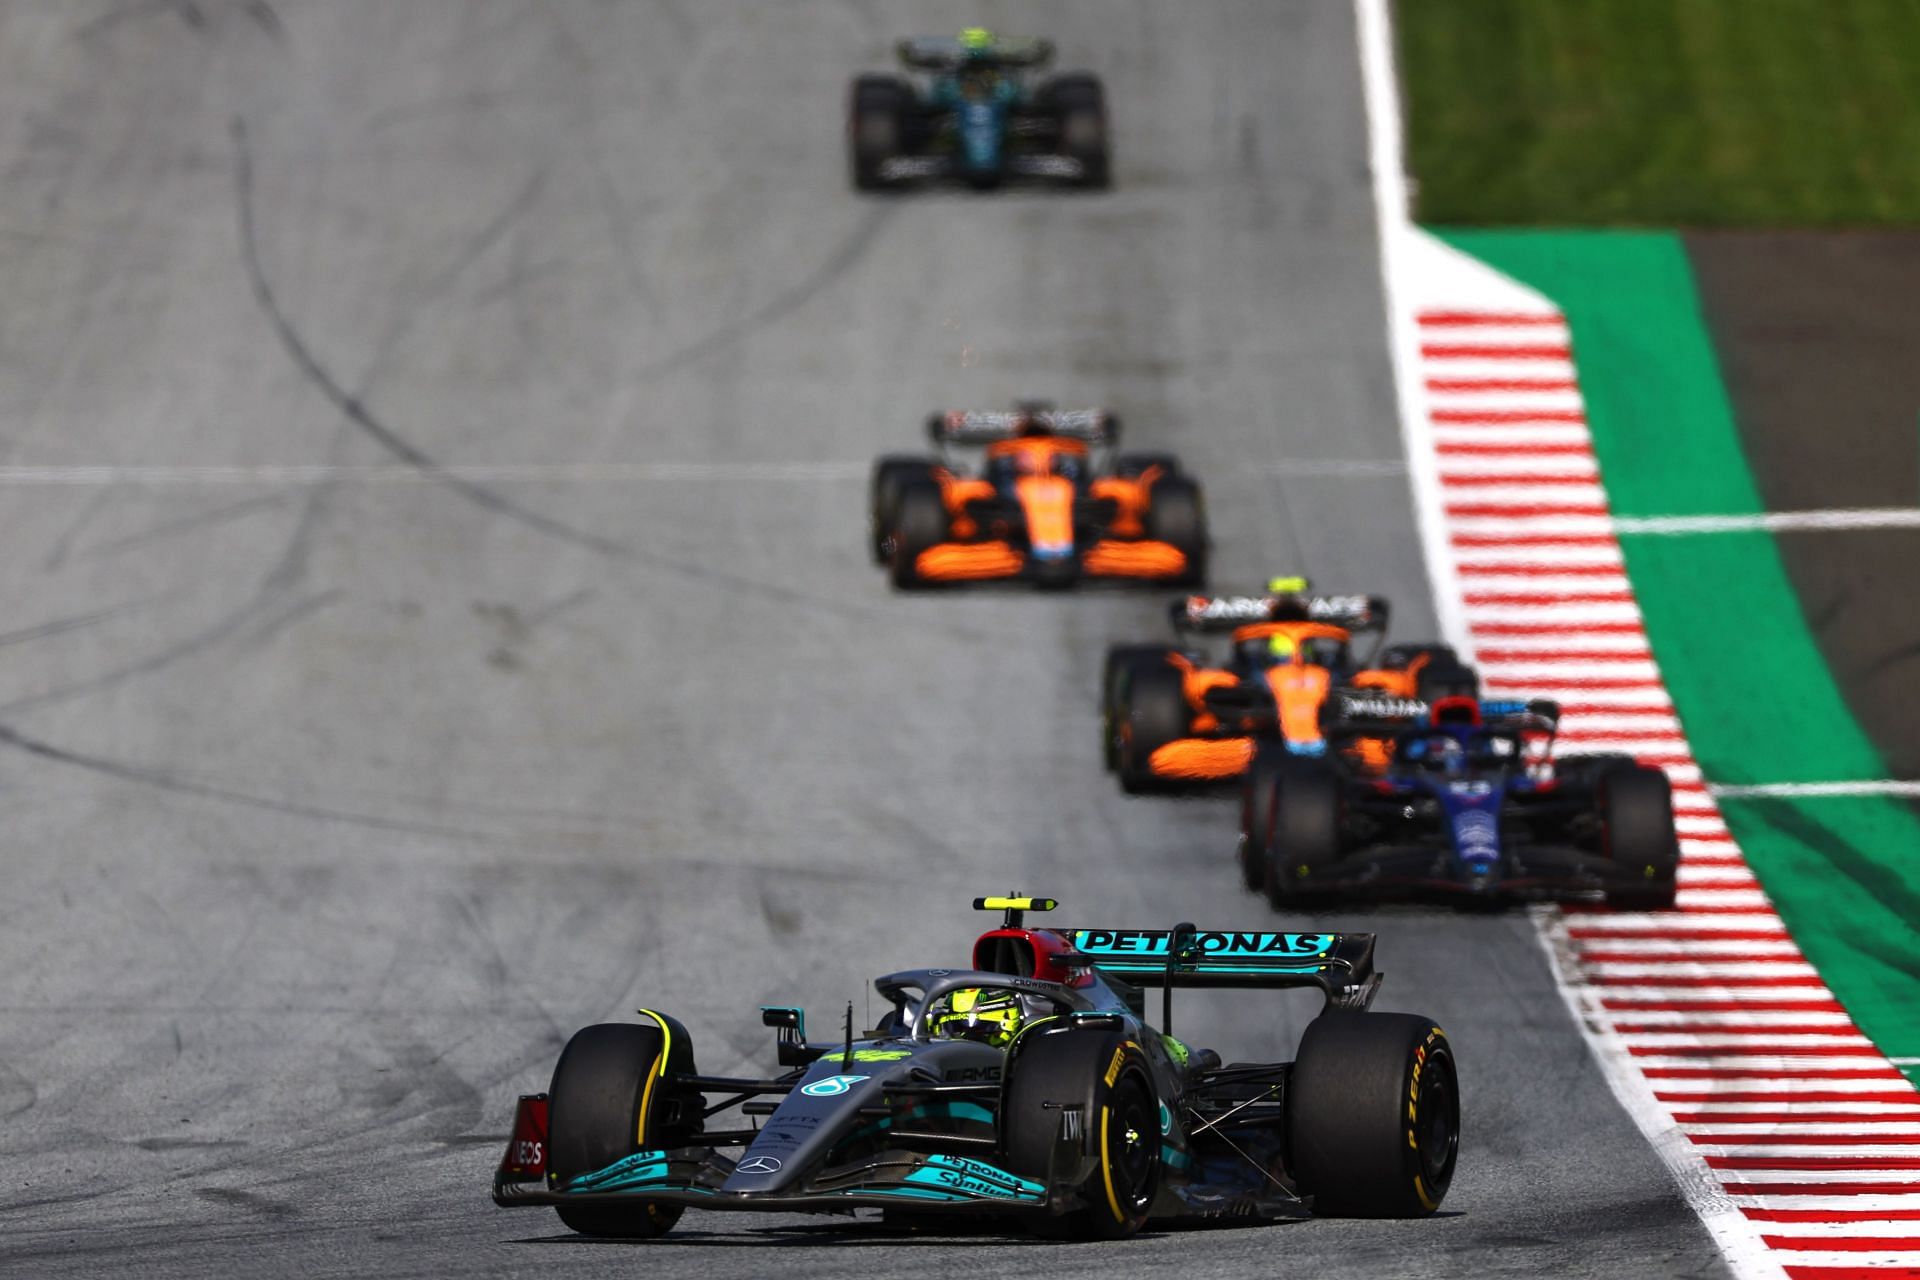 2022 F1 Grand Prix of Austria - Sprint - Lewis Hamilton leads a group of cars in Austria